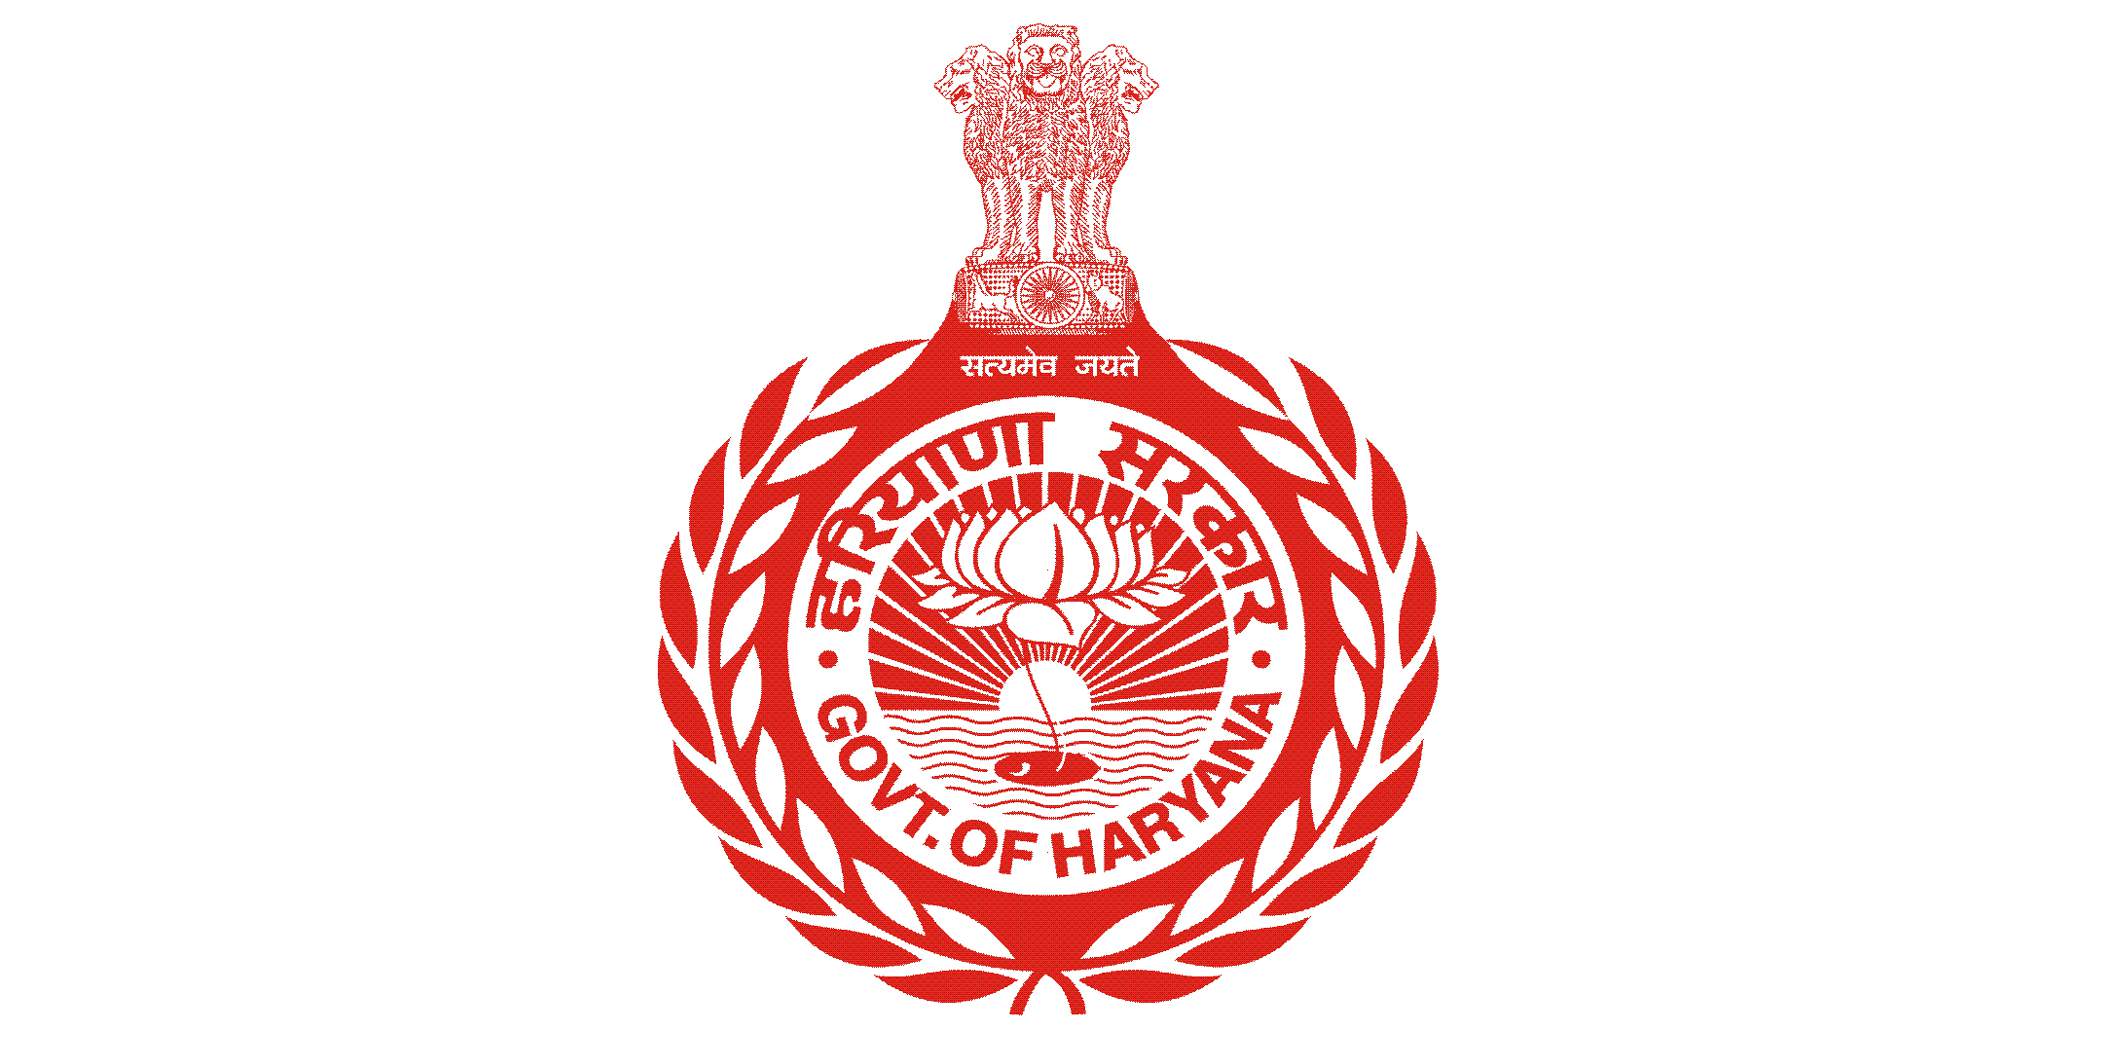 Government of Haryana logo